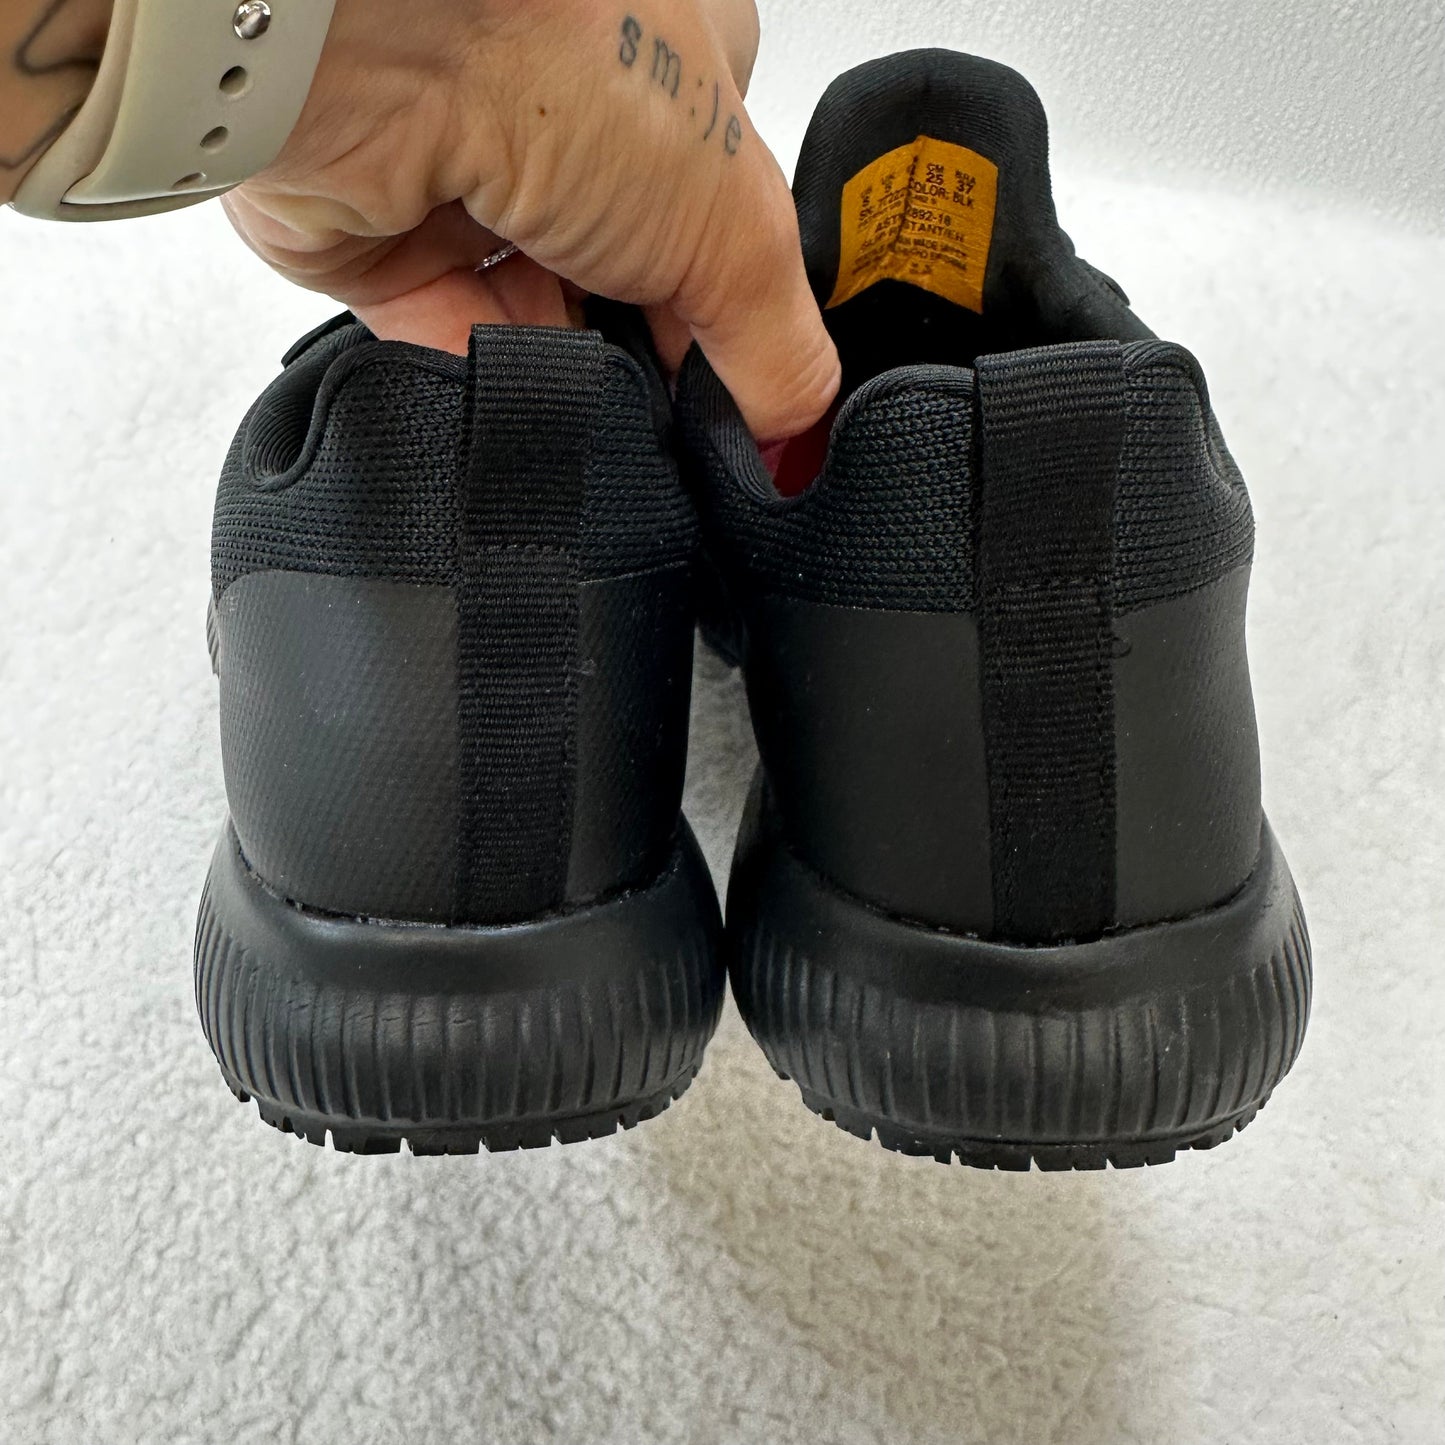 Black Shoes Sneakers Skechers, Size 8